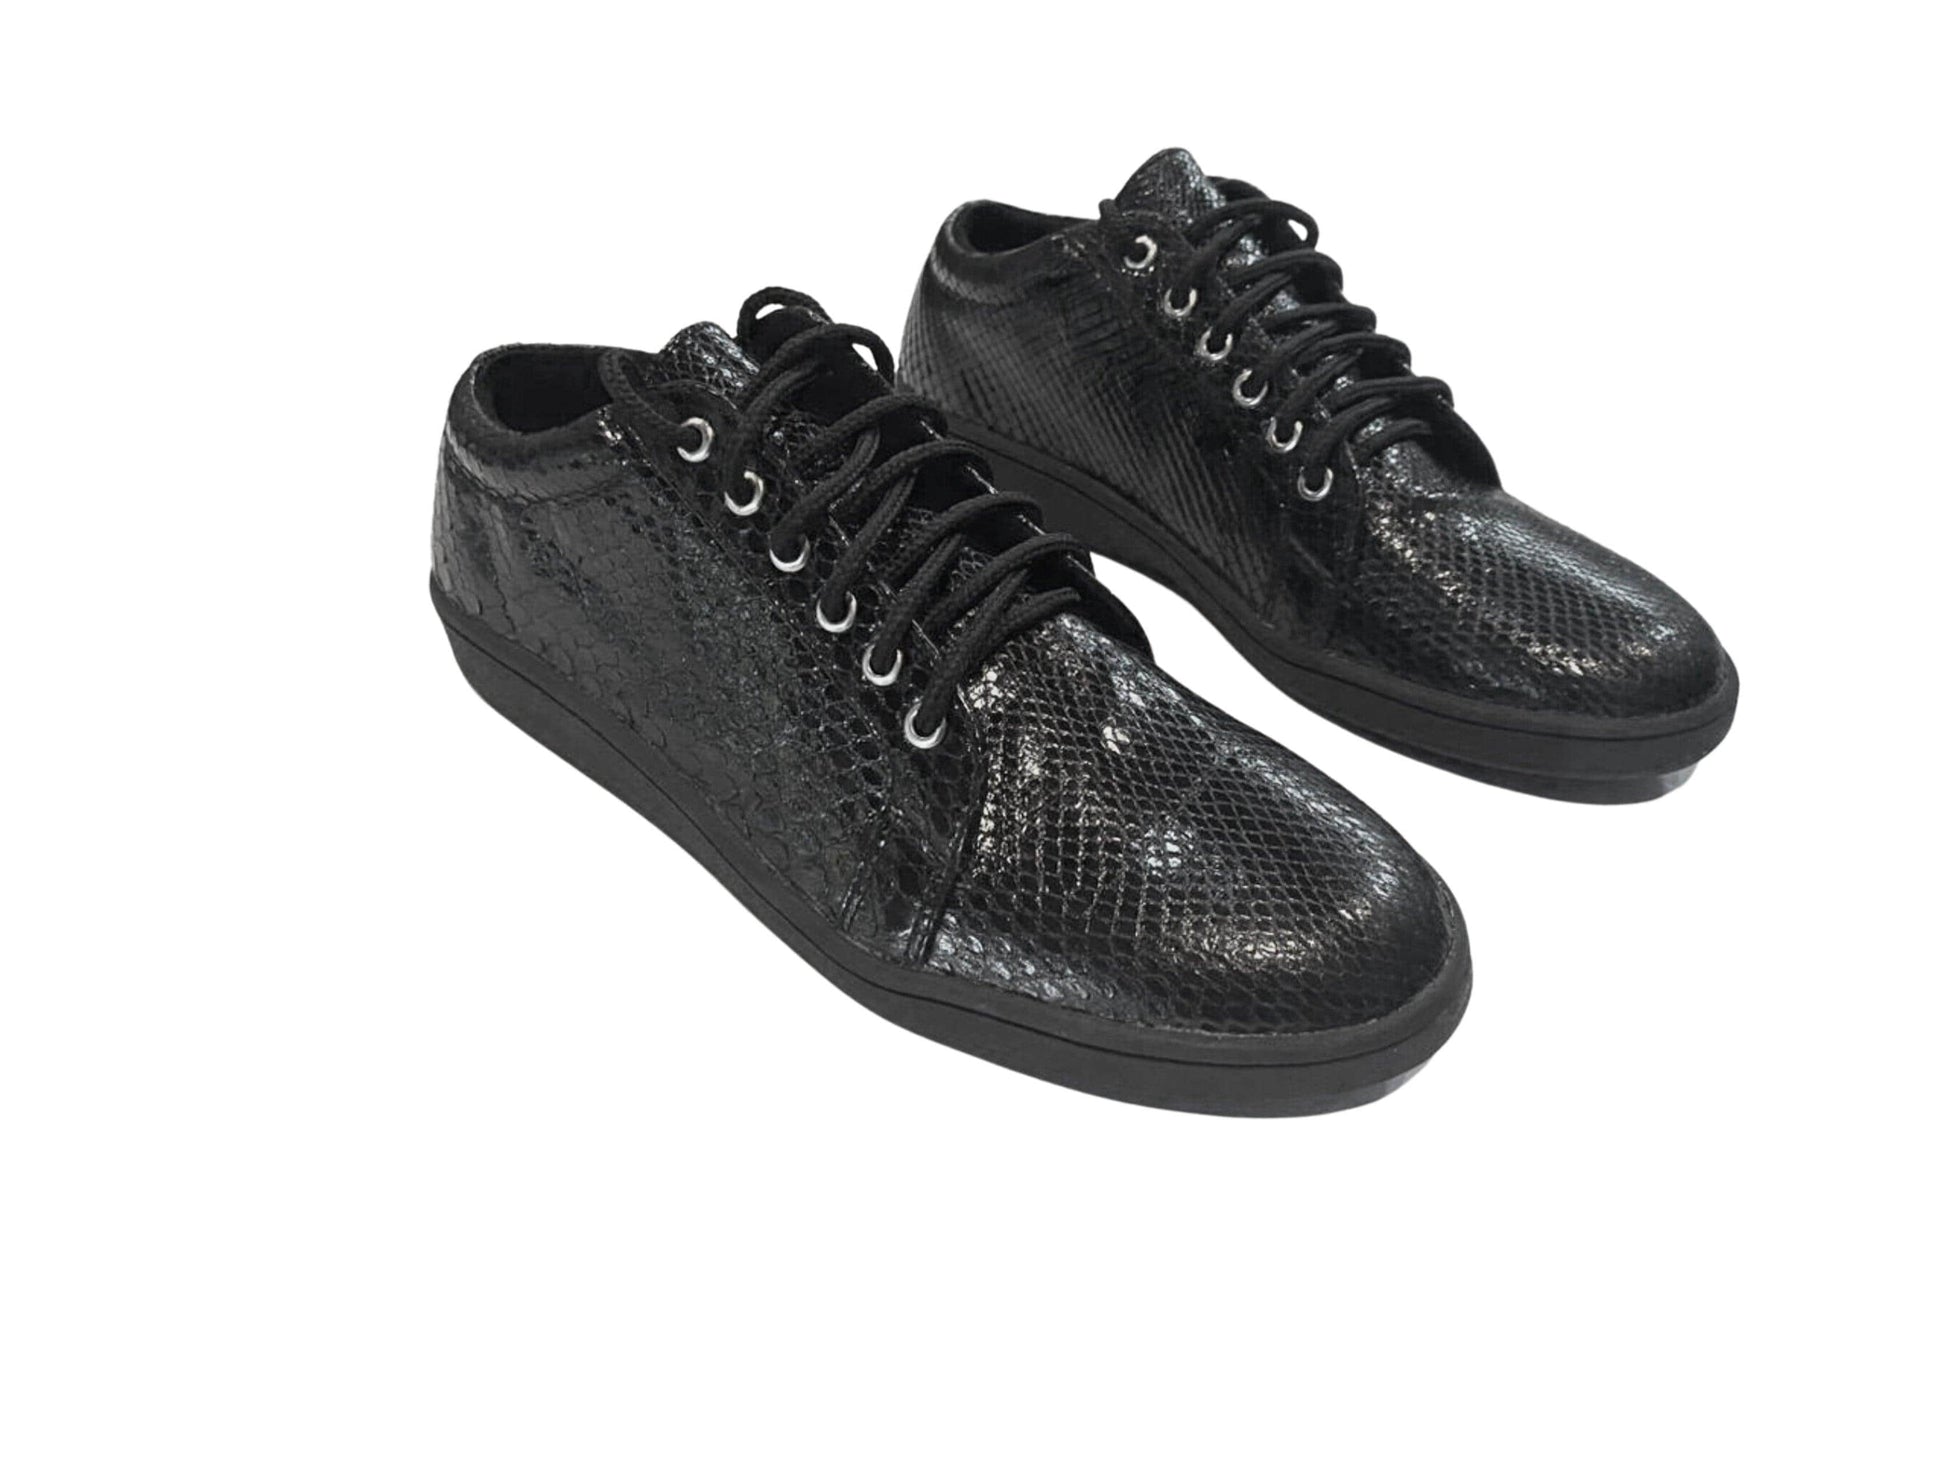 Shoes Black Snakeskin Sneaker Shoes Python Jacket by LFM Fashion